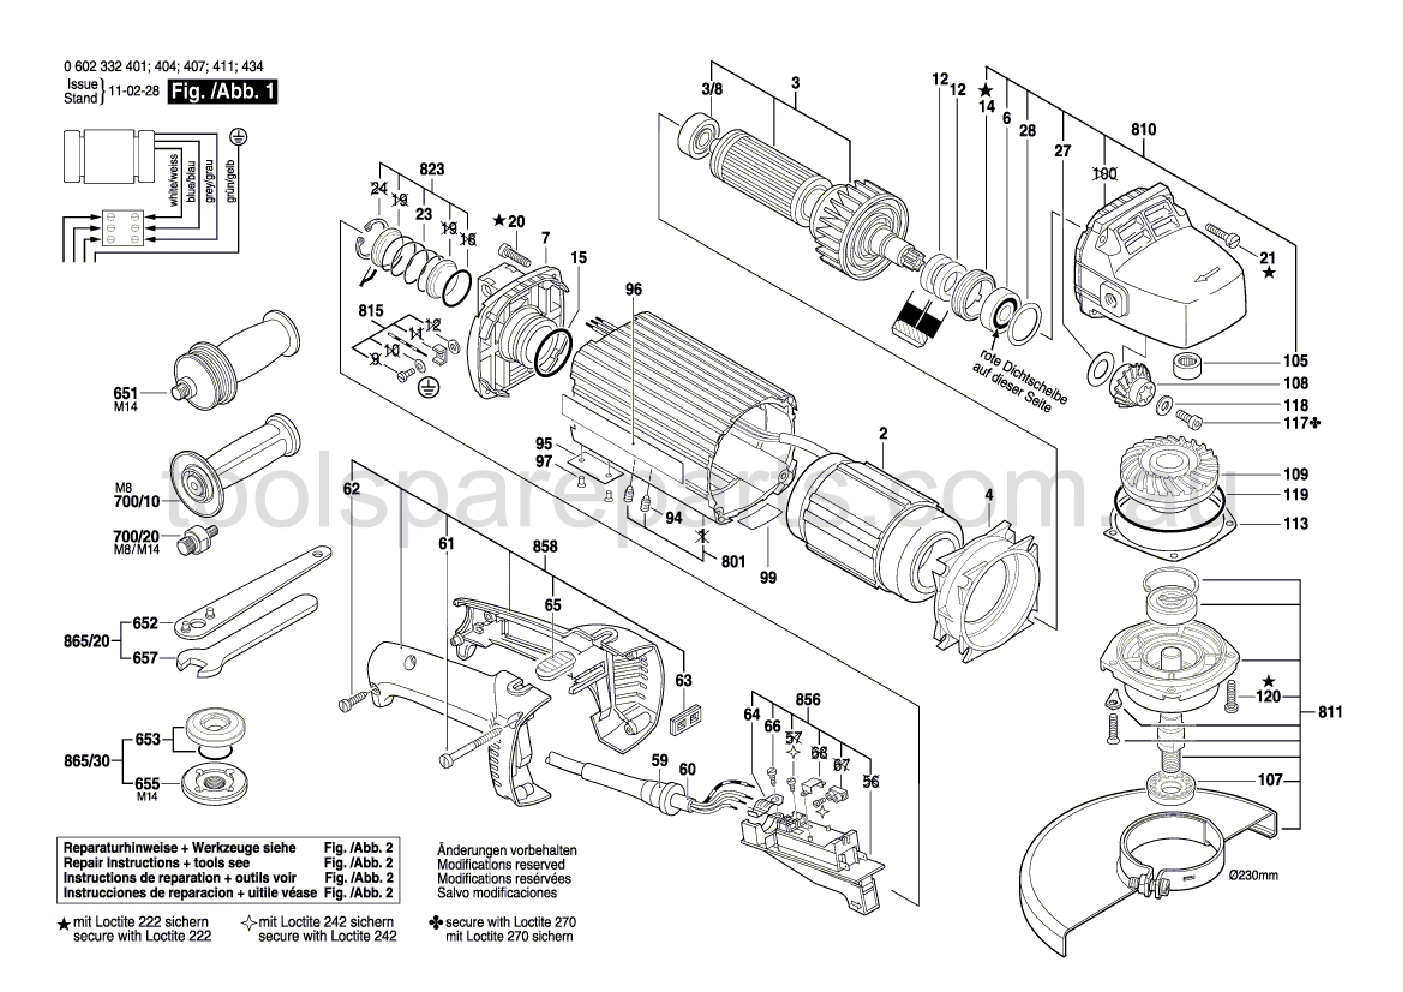 Bosch ---- 0602332404  Diagram 1